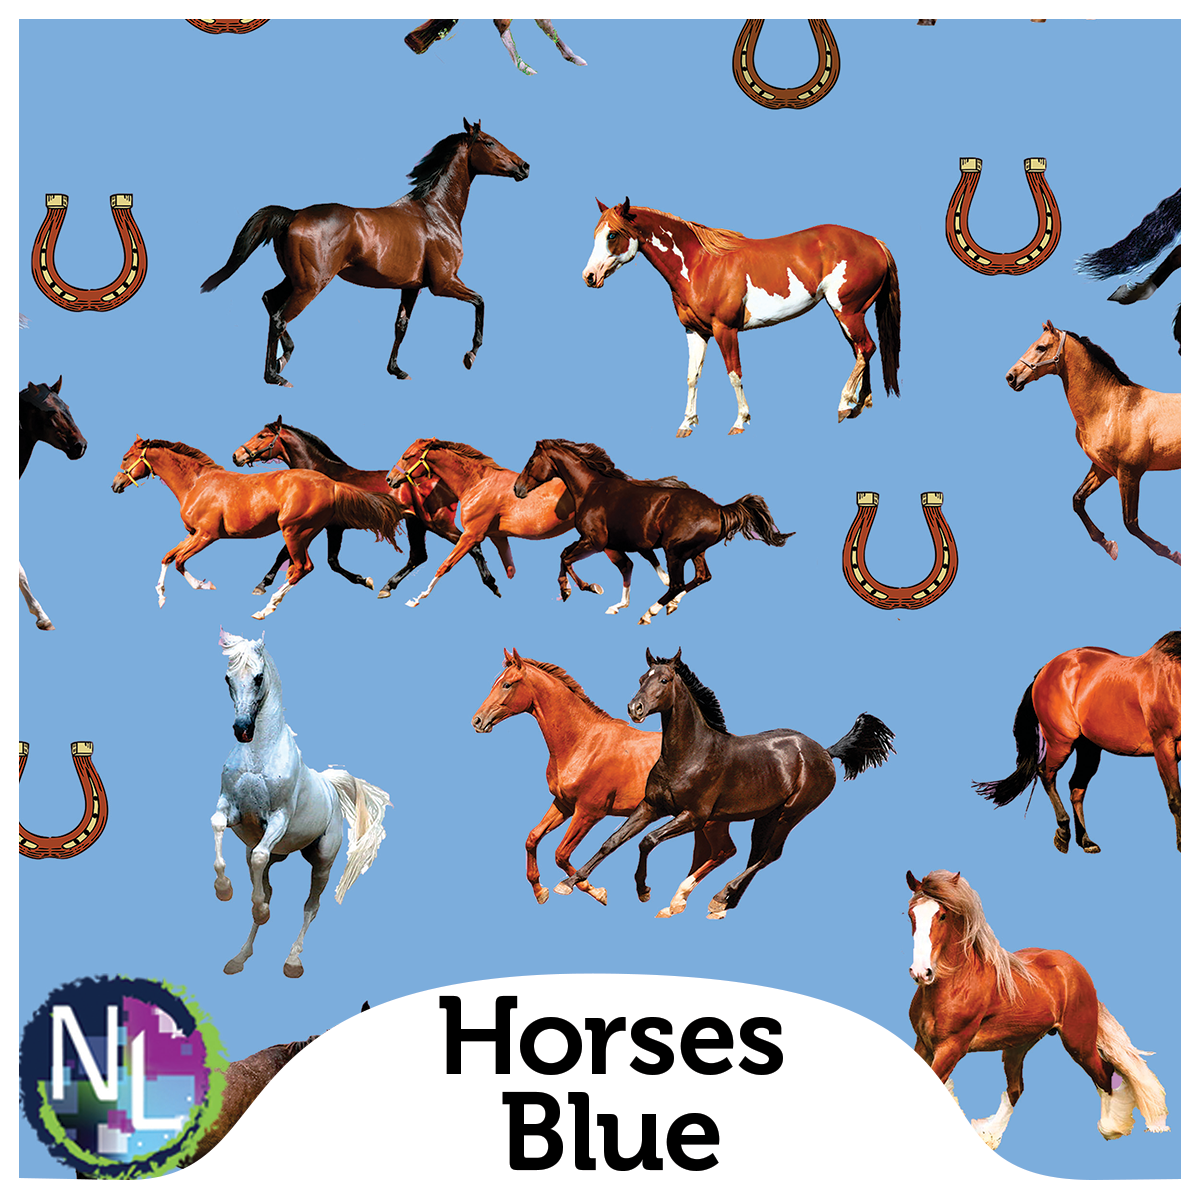 Horses (Blue)